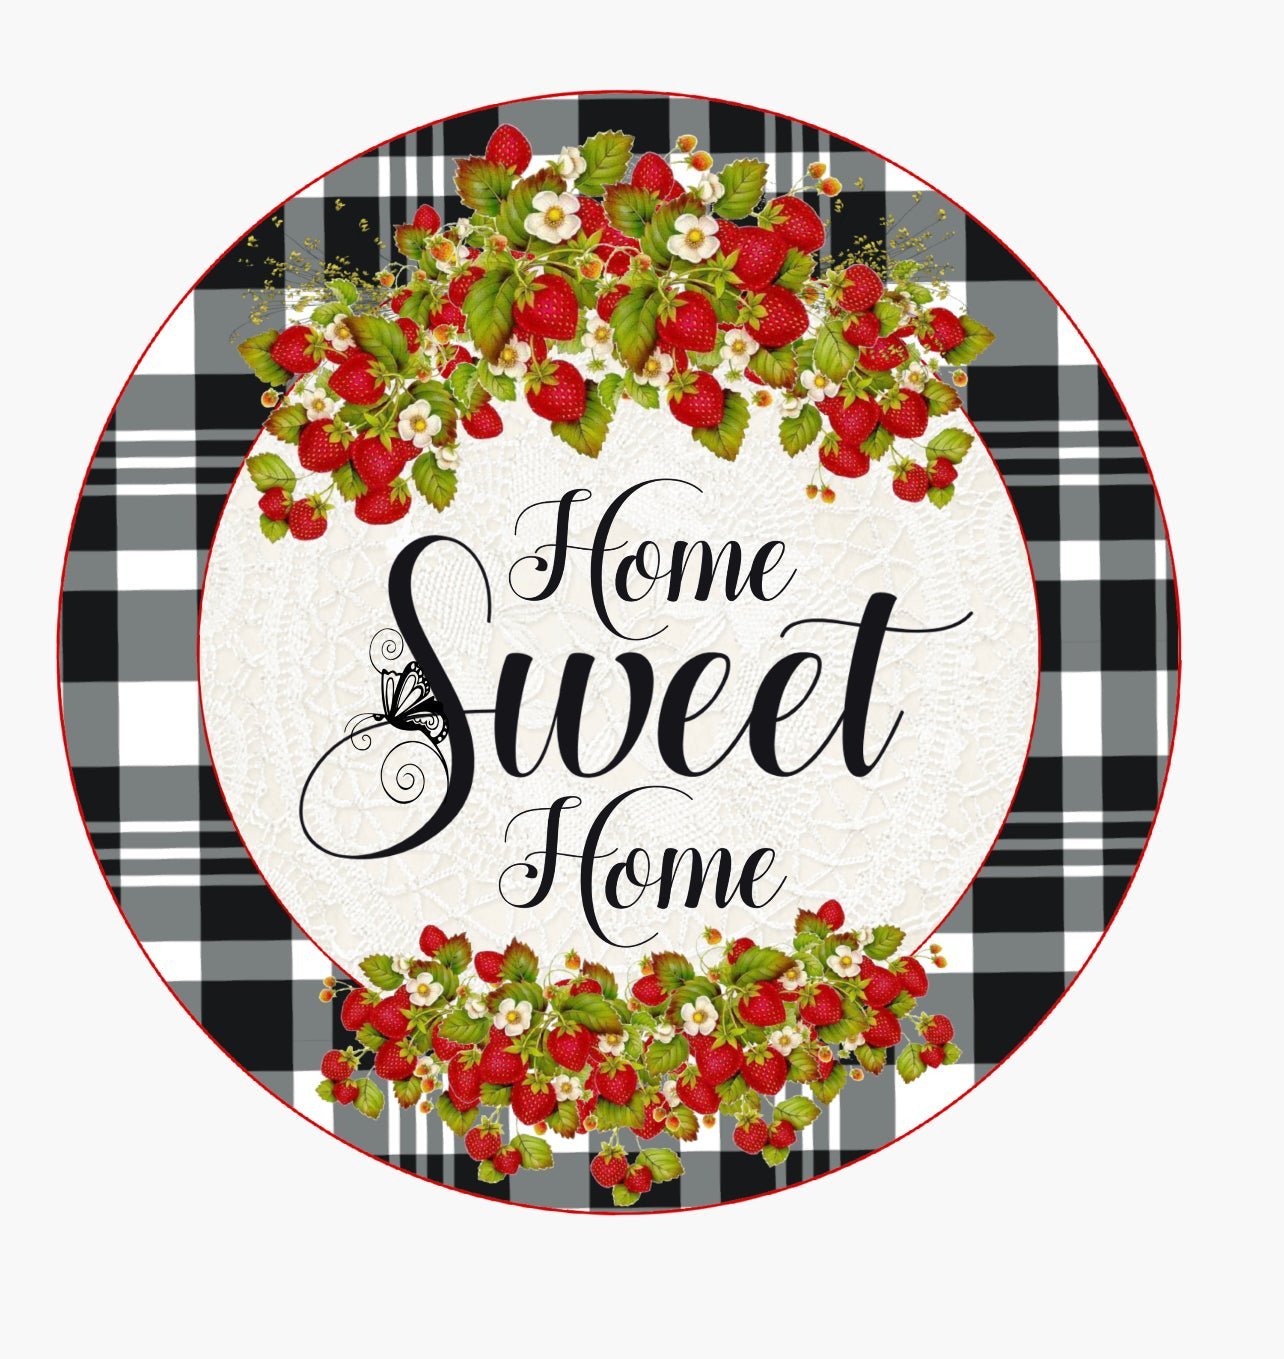 Home sweet home strawberries 10” round sign - Greenery MarketNovelty SignsstrawberryMEDIUM